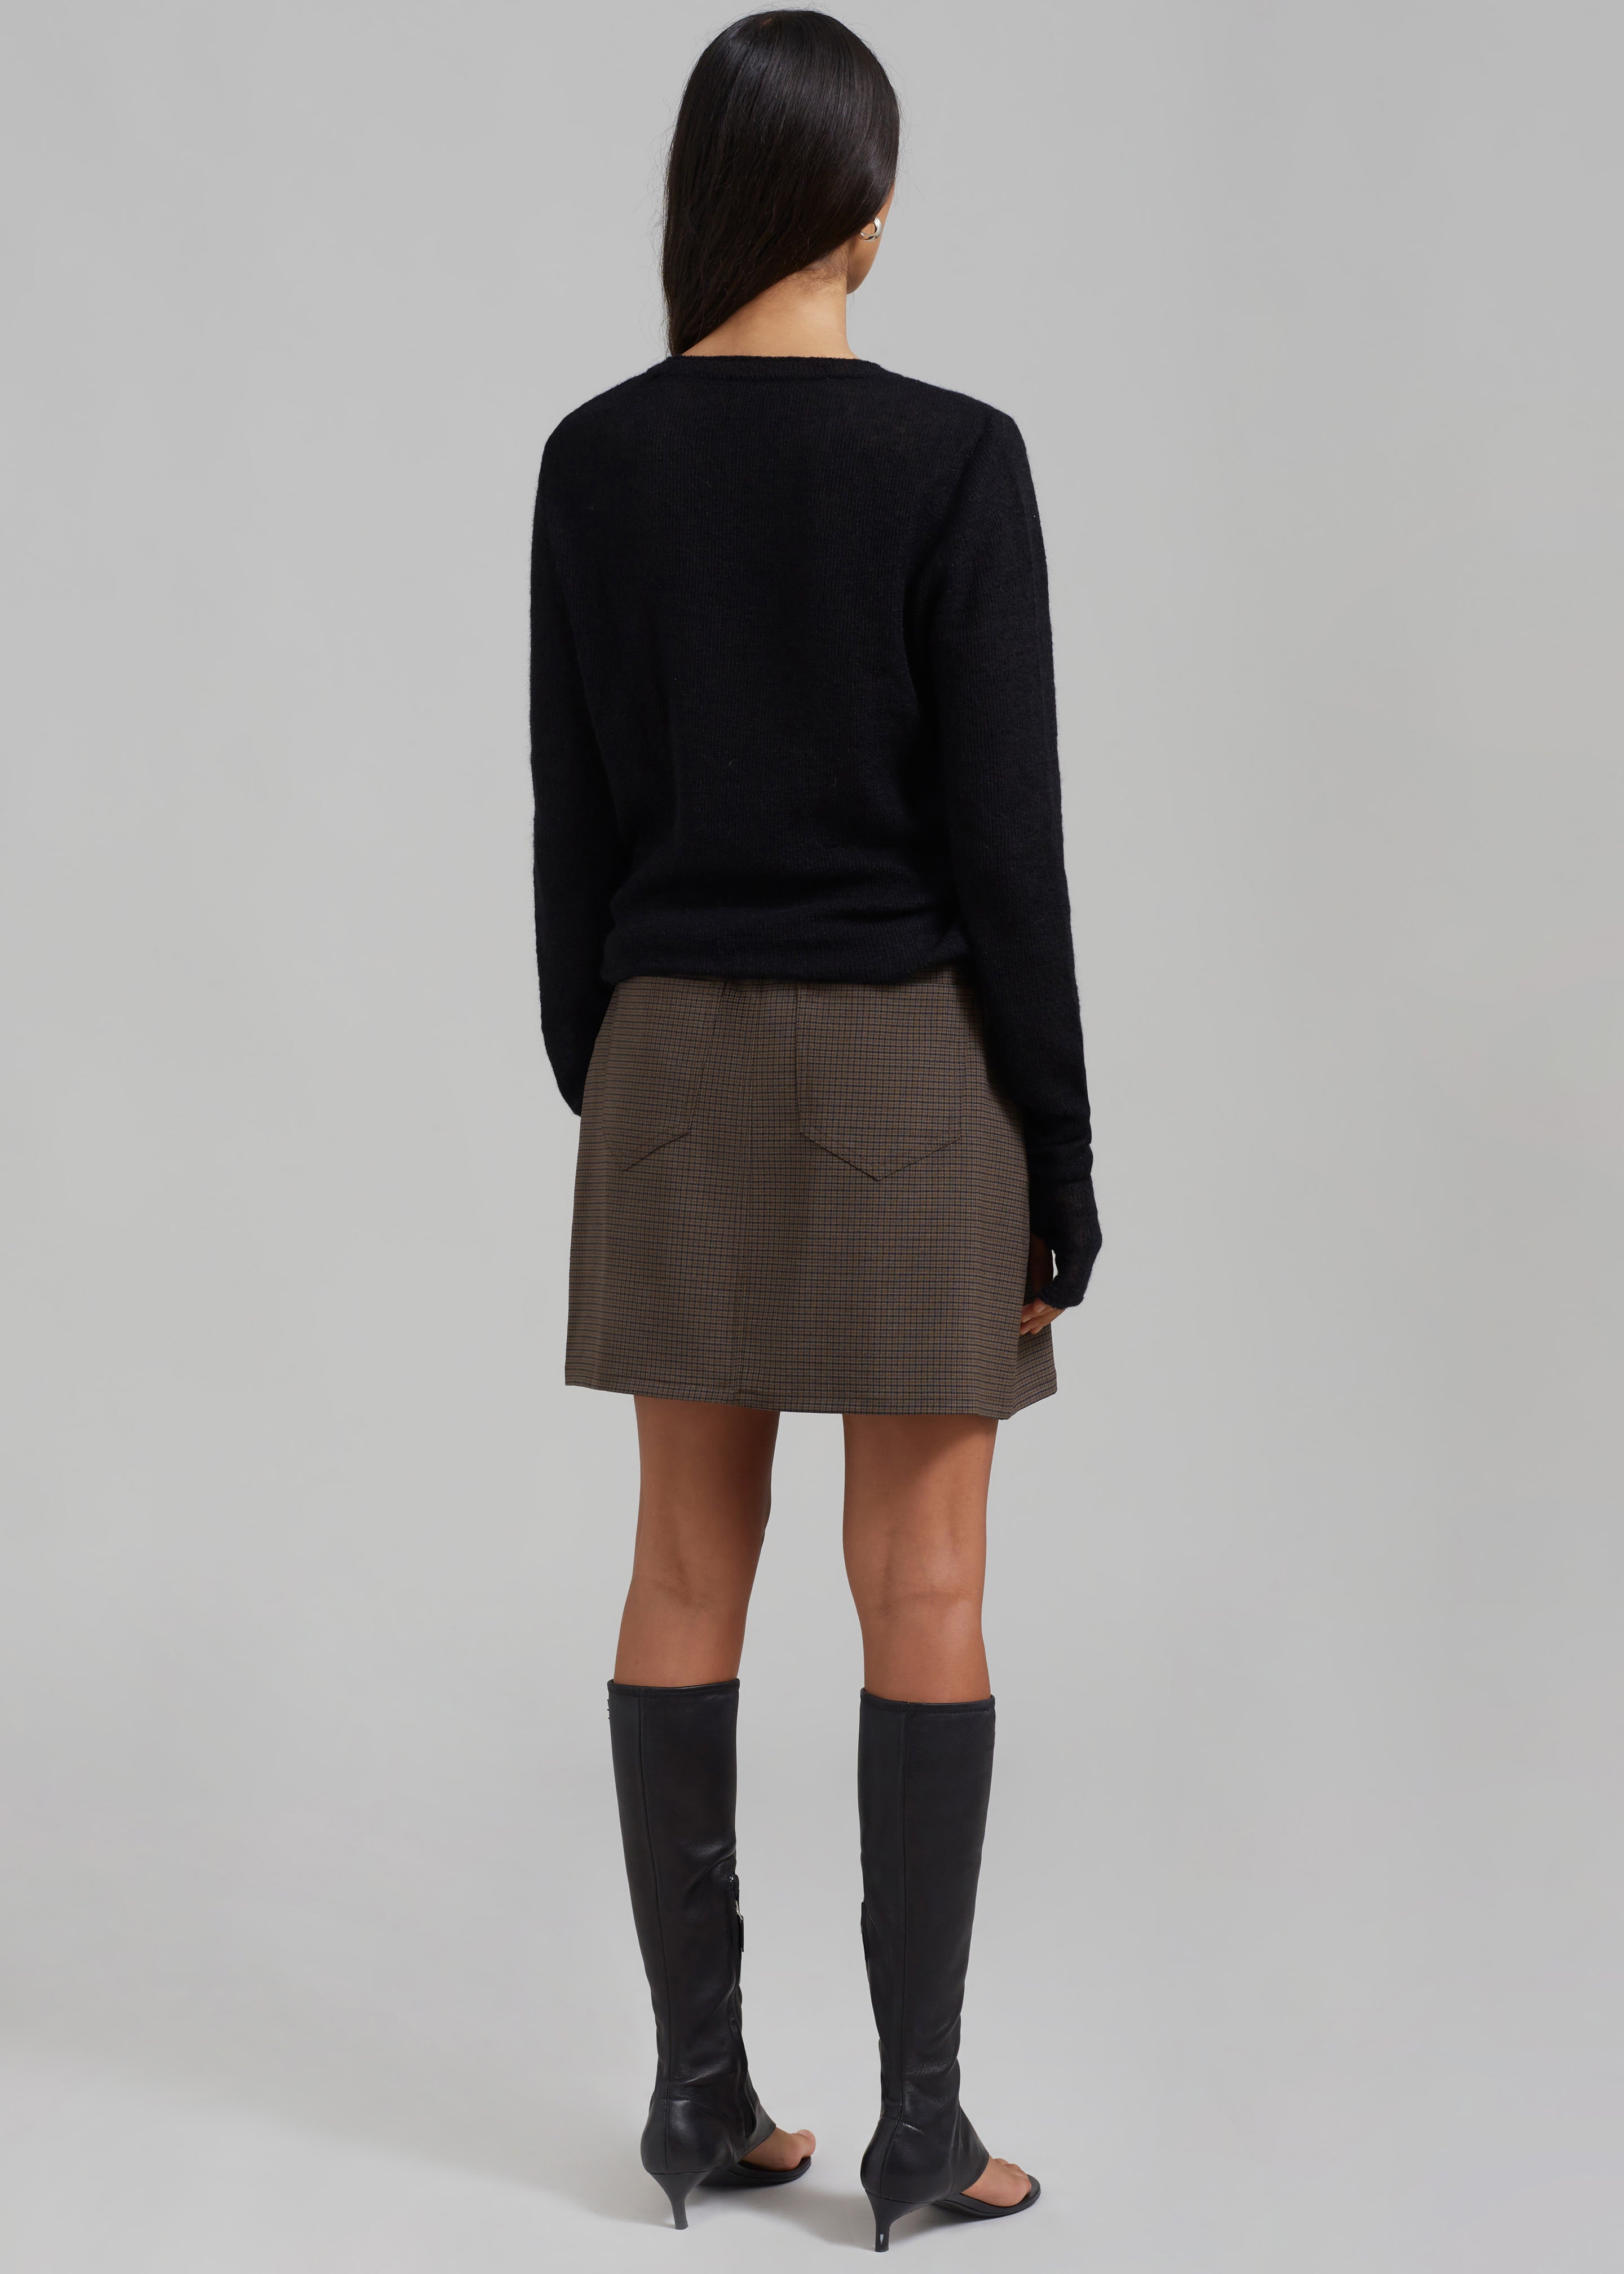 JW Anderson Padlock Strap Mini Skirt - Brown Sugar Comb - 6